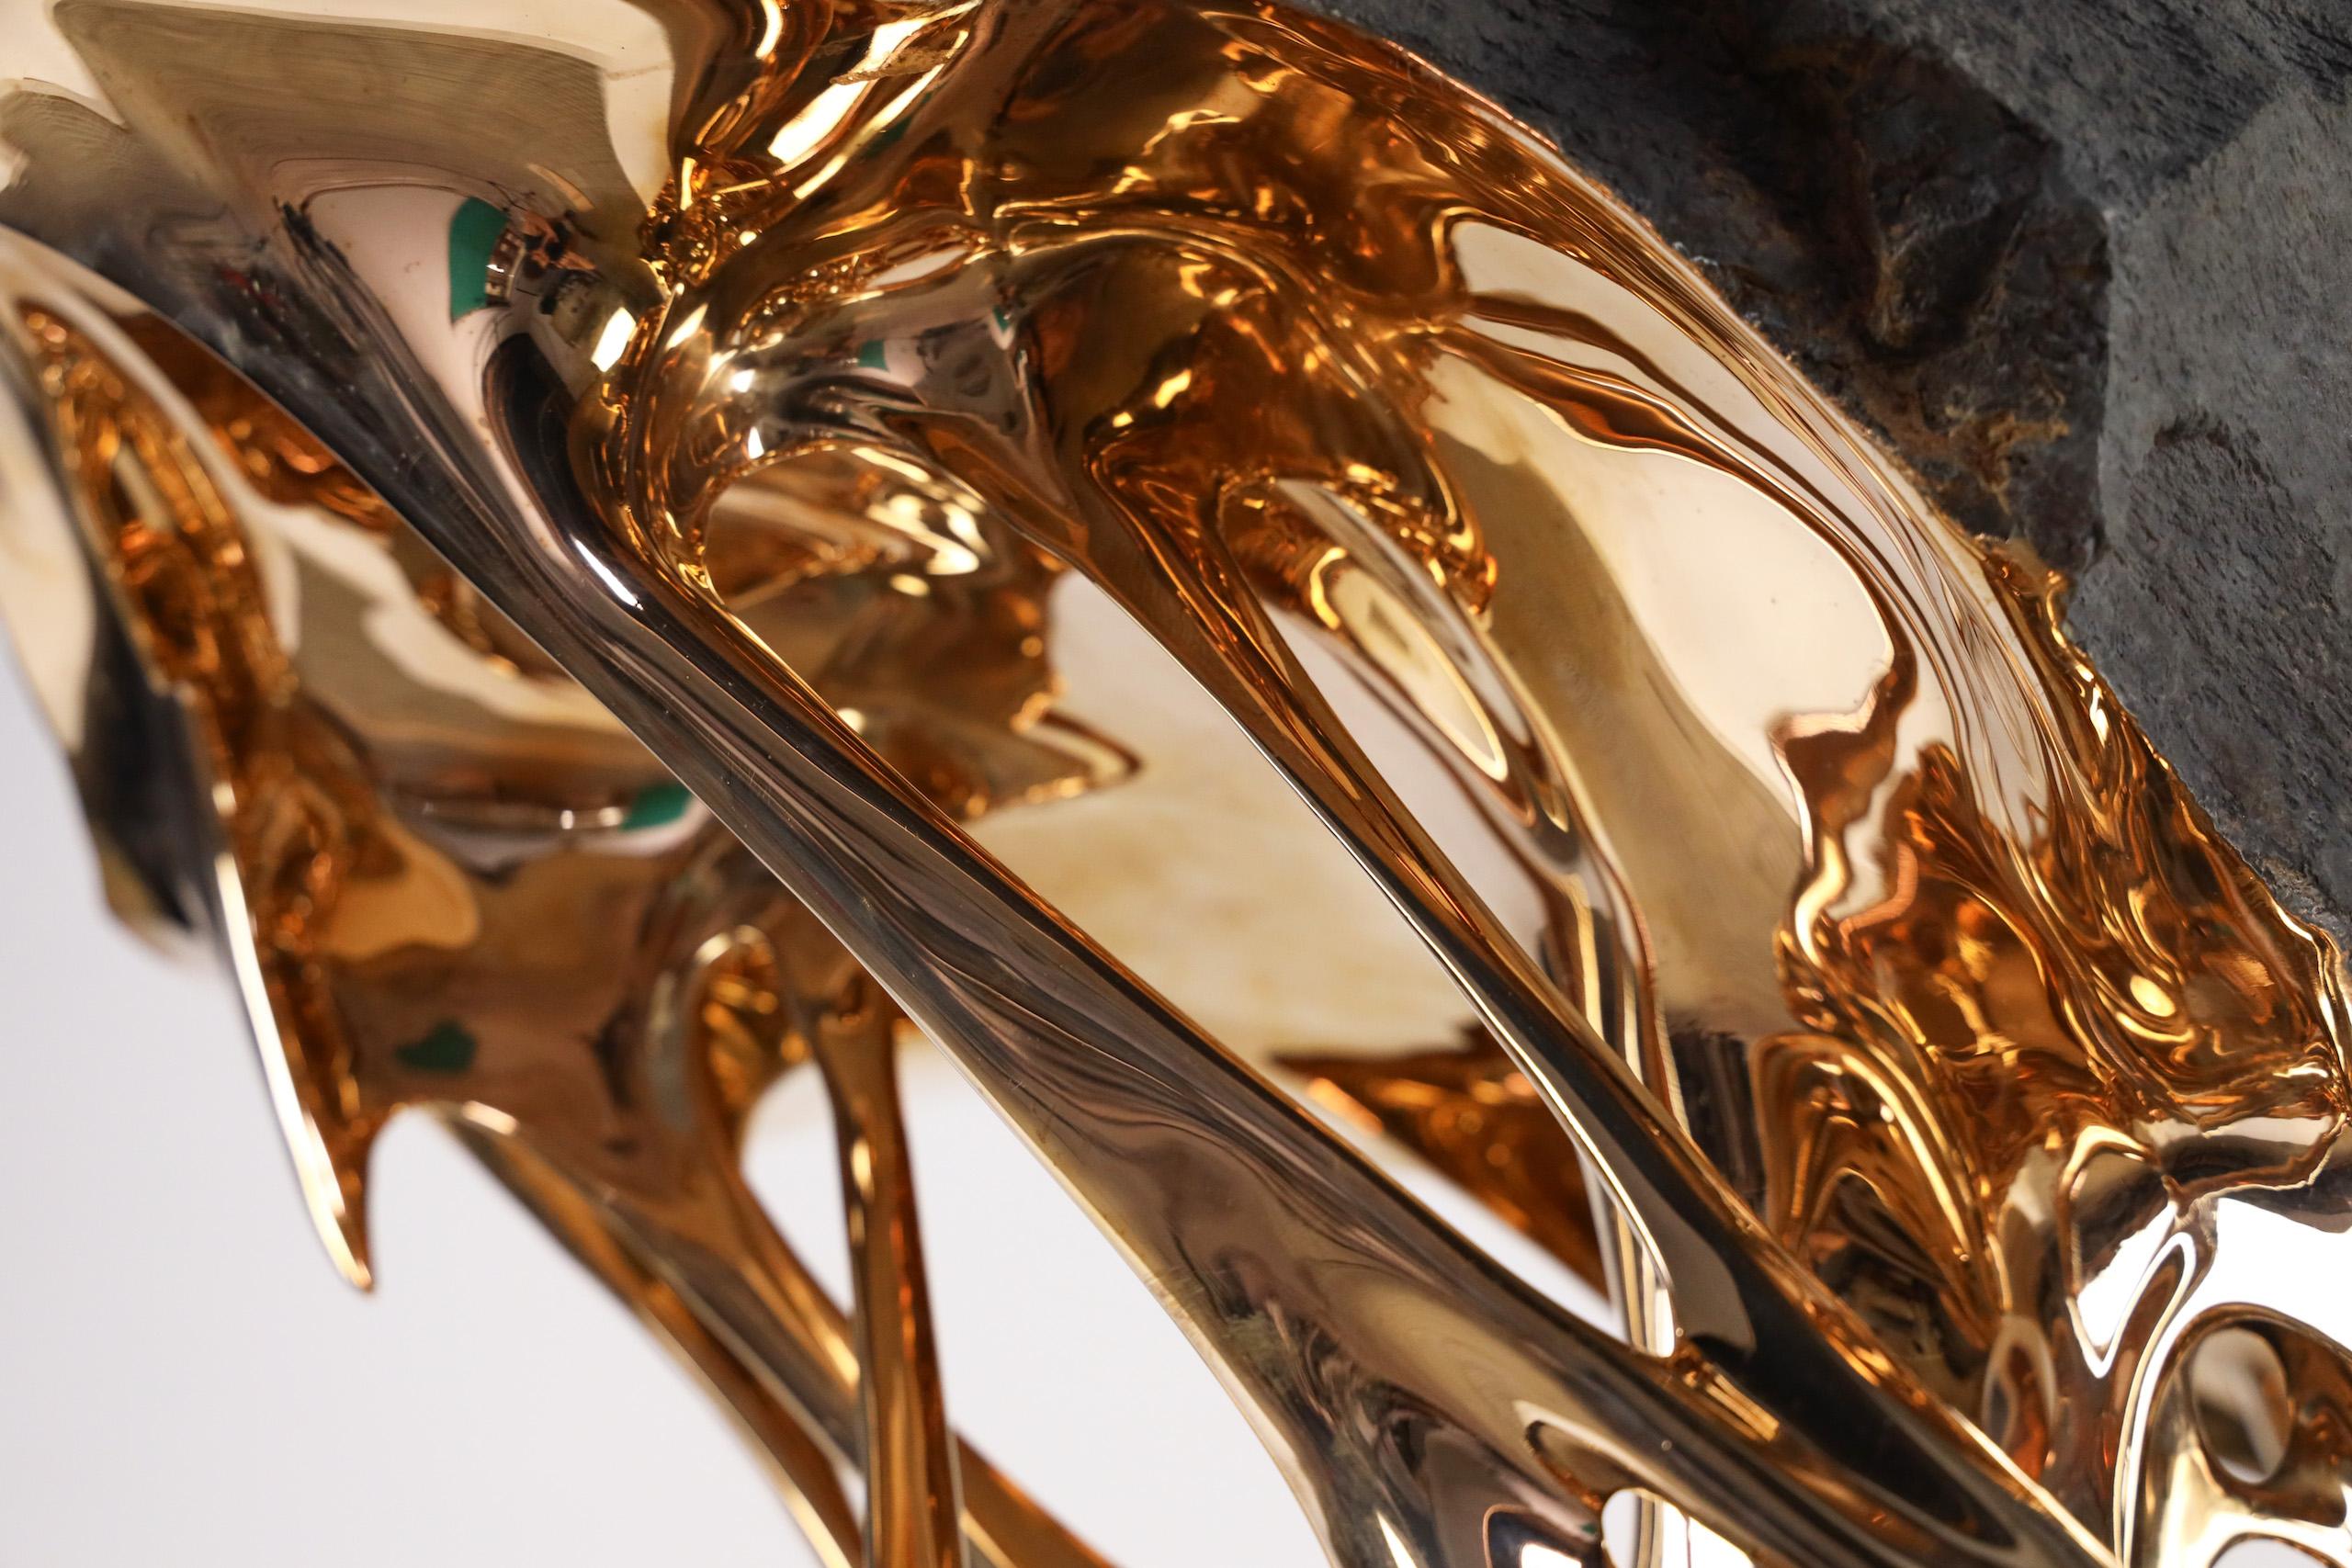 Gaïa by Romain Langlois - Rock-like bronze sculpture, golden, abstract For Sale 9